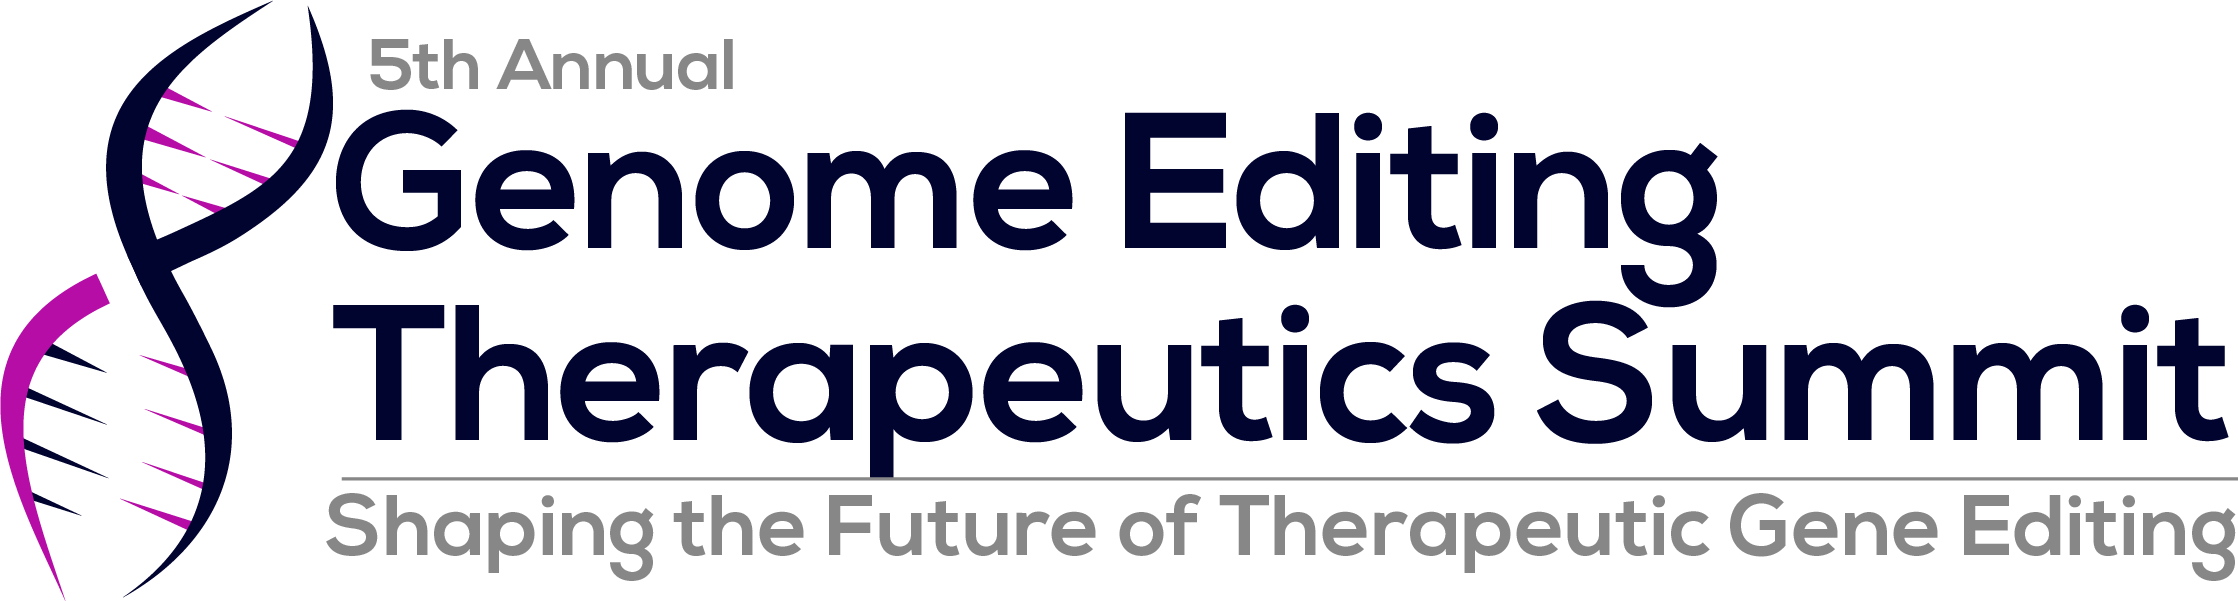 HW240702 5th Annual Genome Editing Therapeutics Summit logo TAG